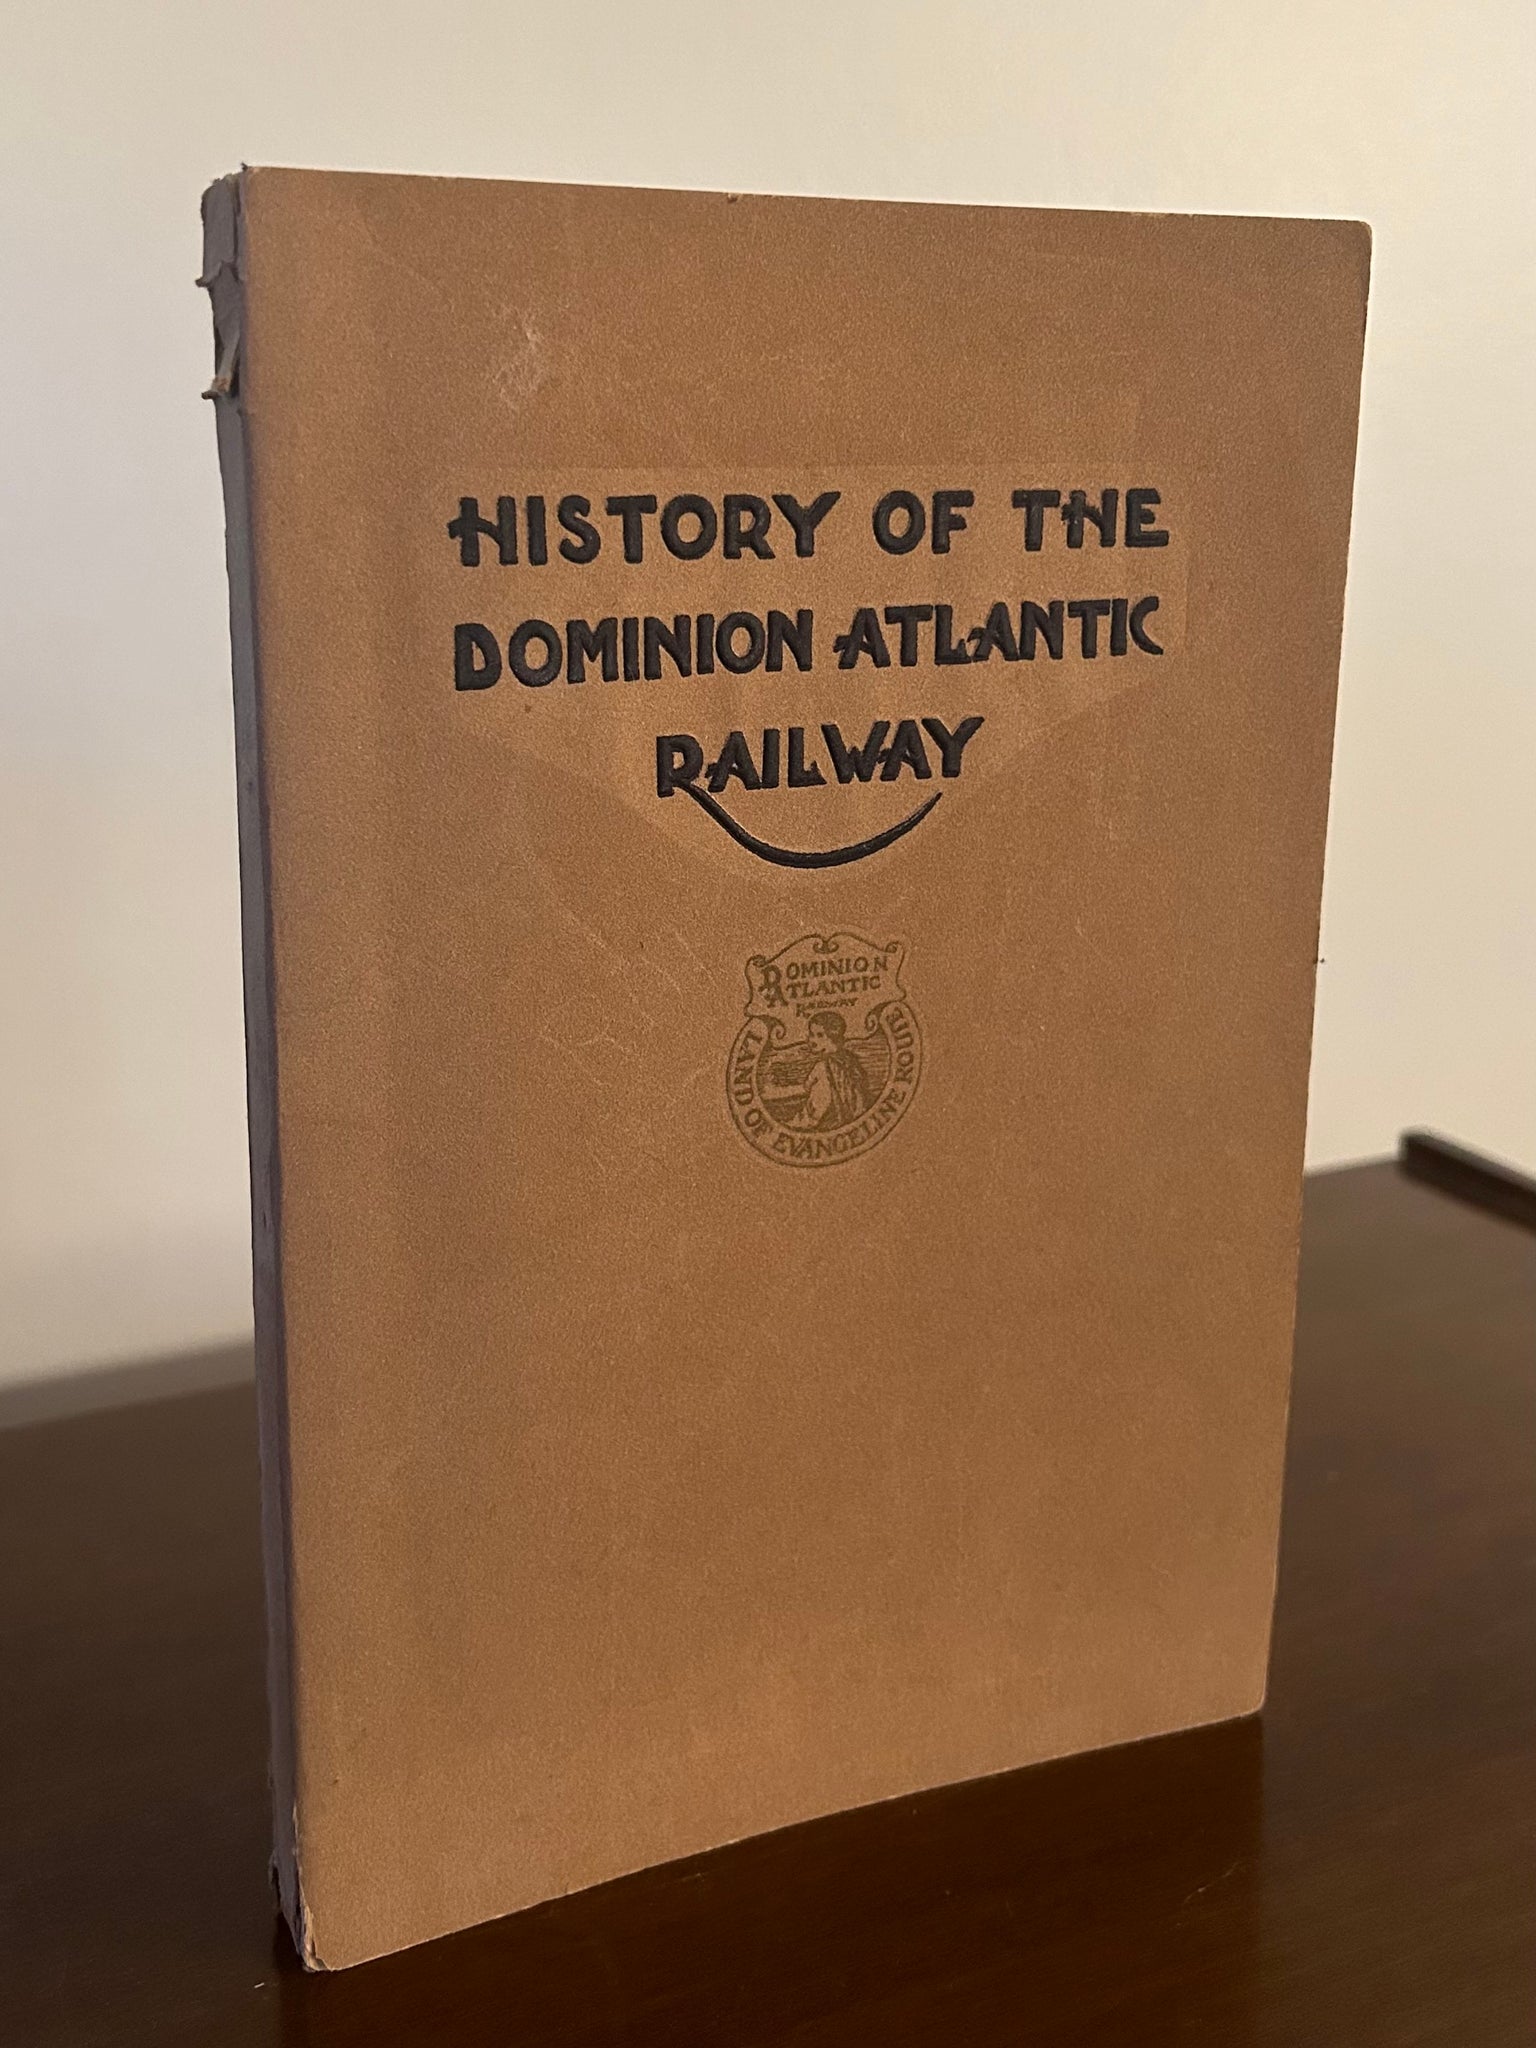 History of the Dominion Atlantic Railway